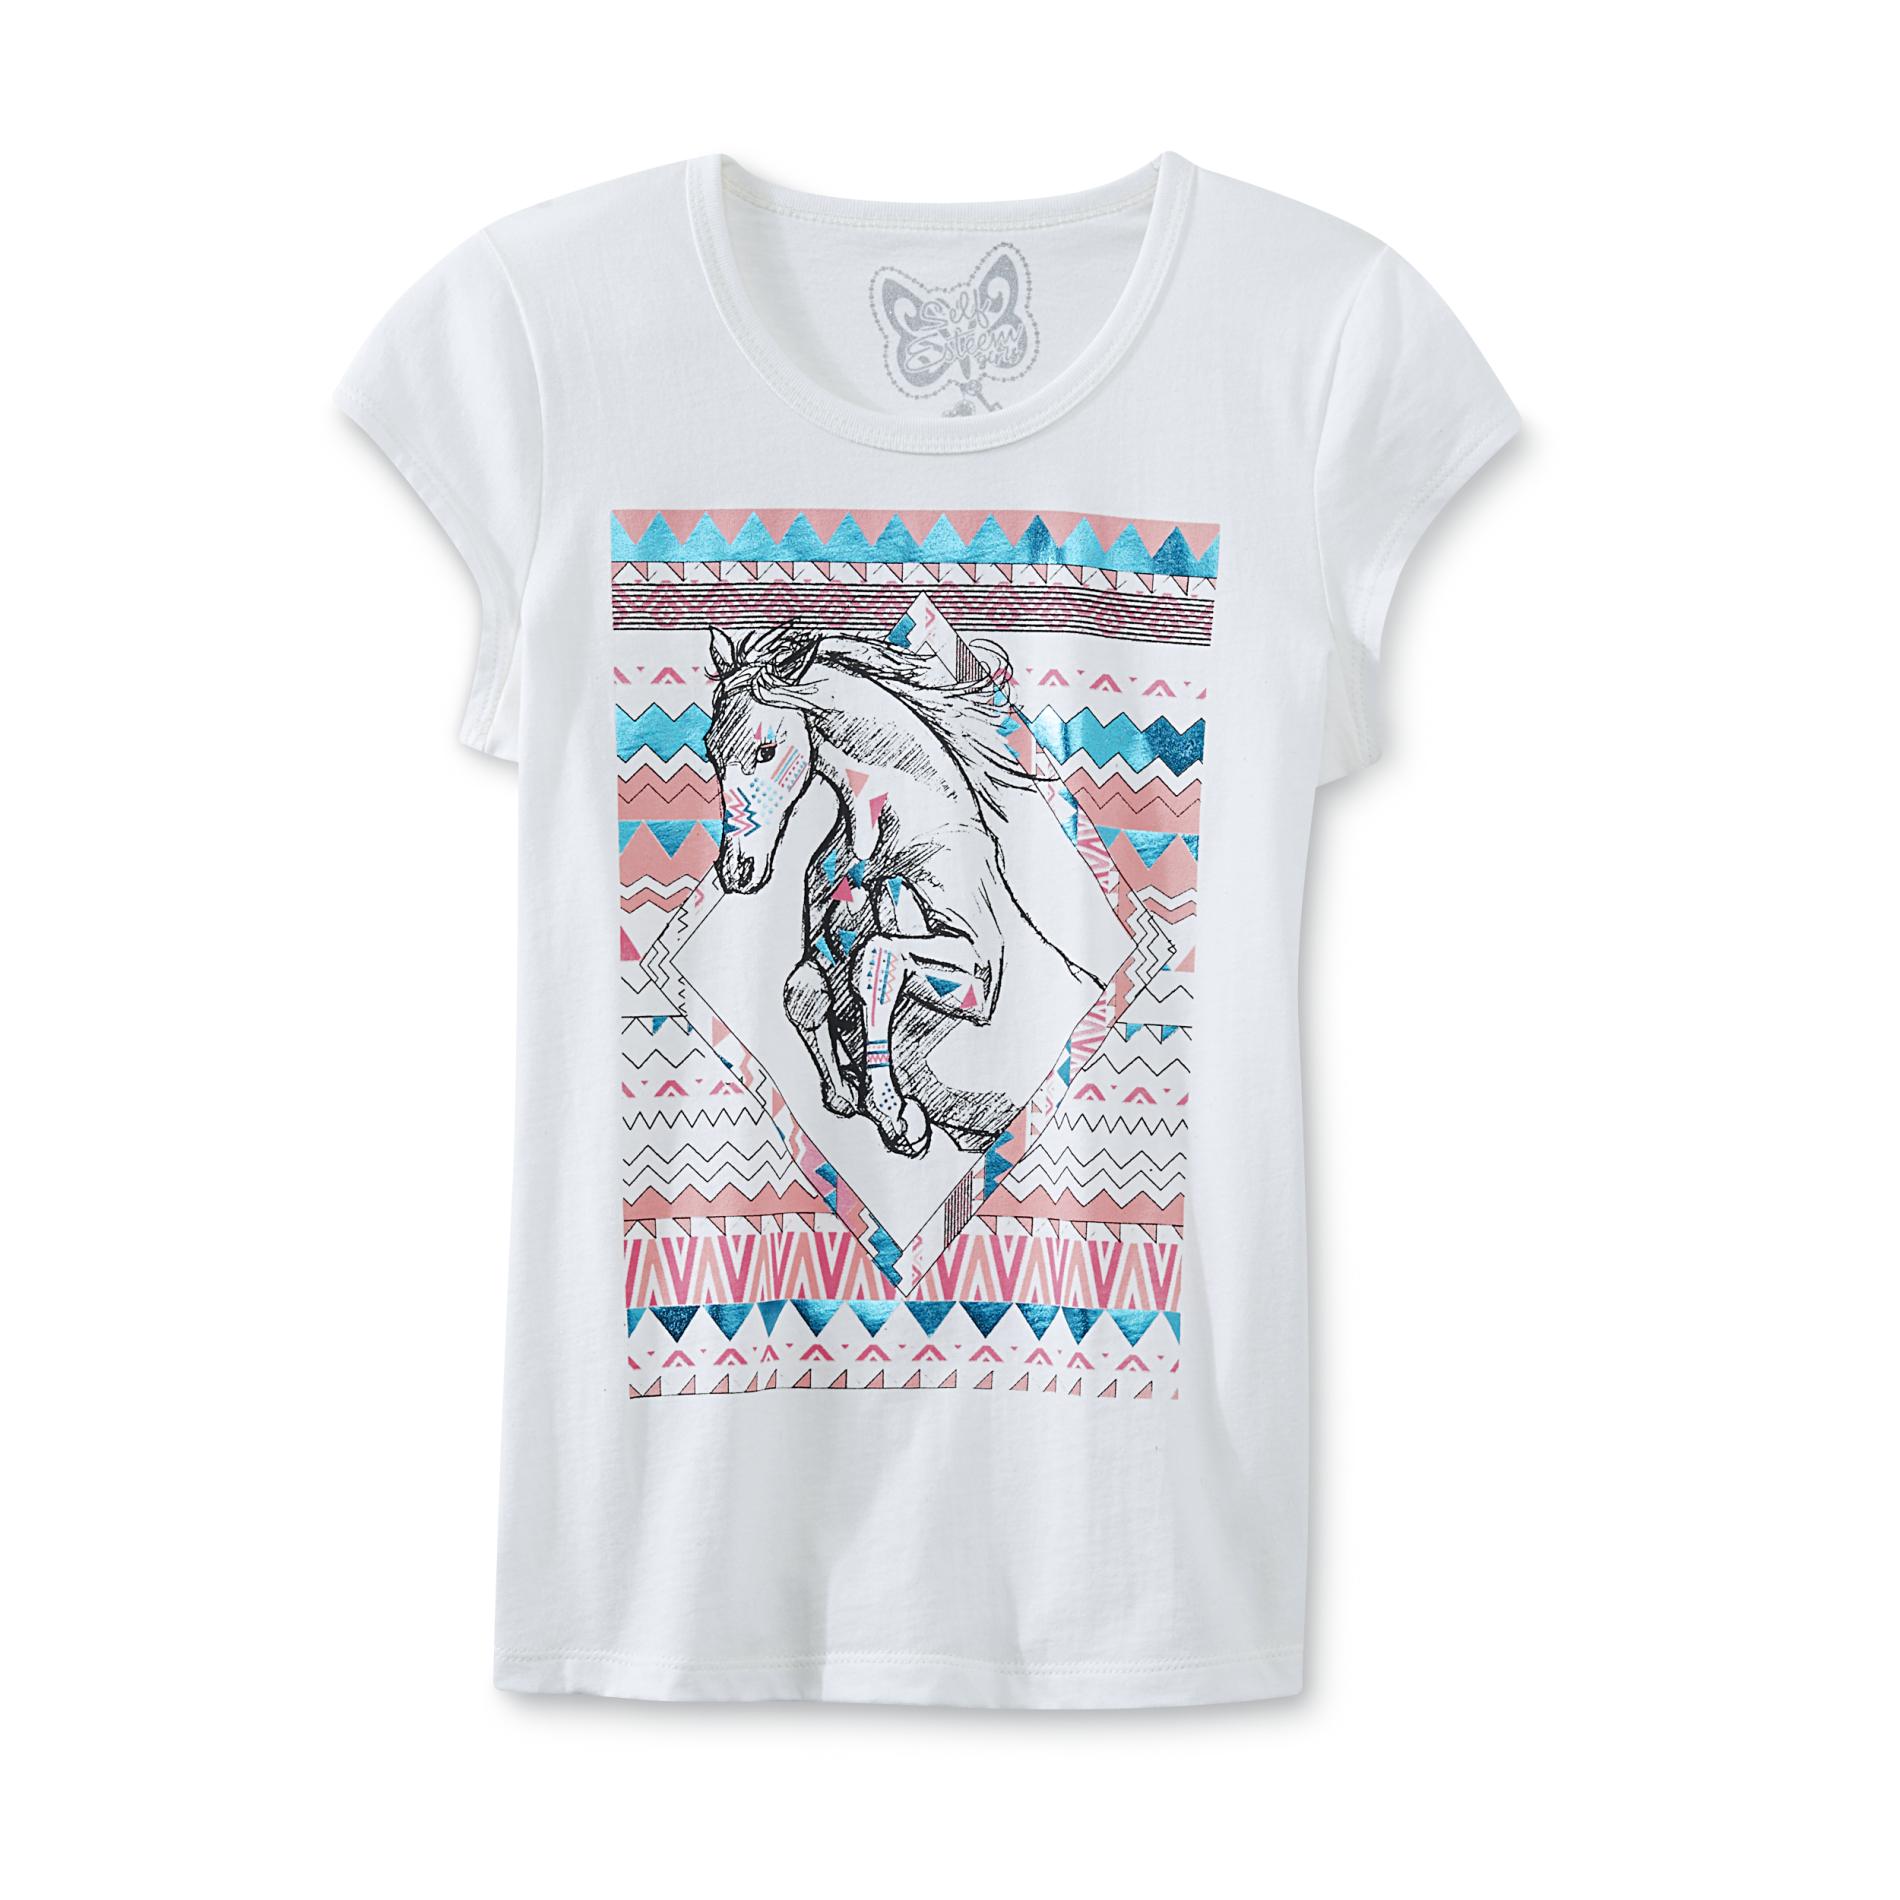 Self Esteem Girl's Graphic T-Shirt - Horse